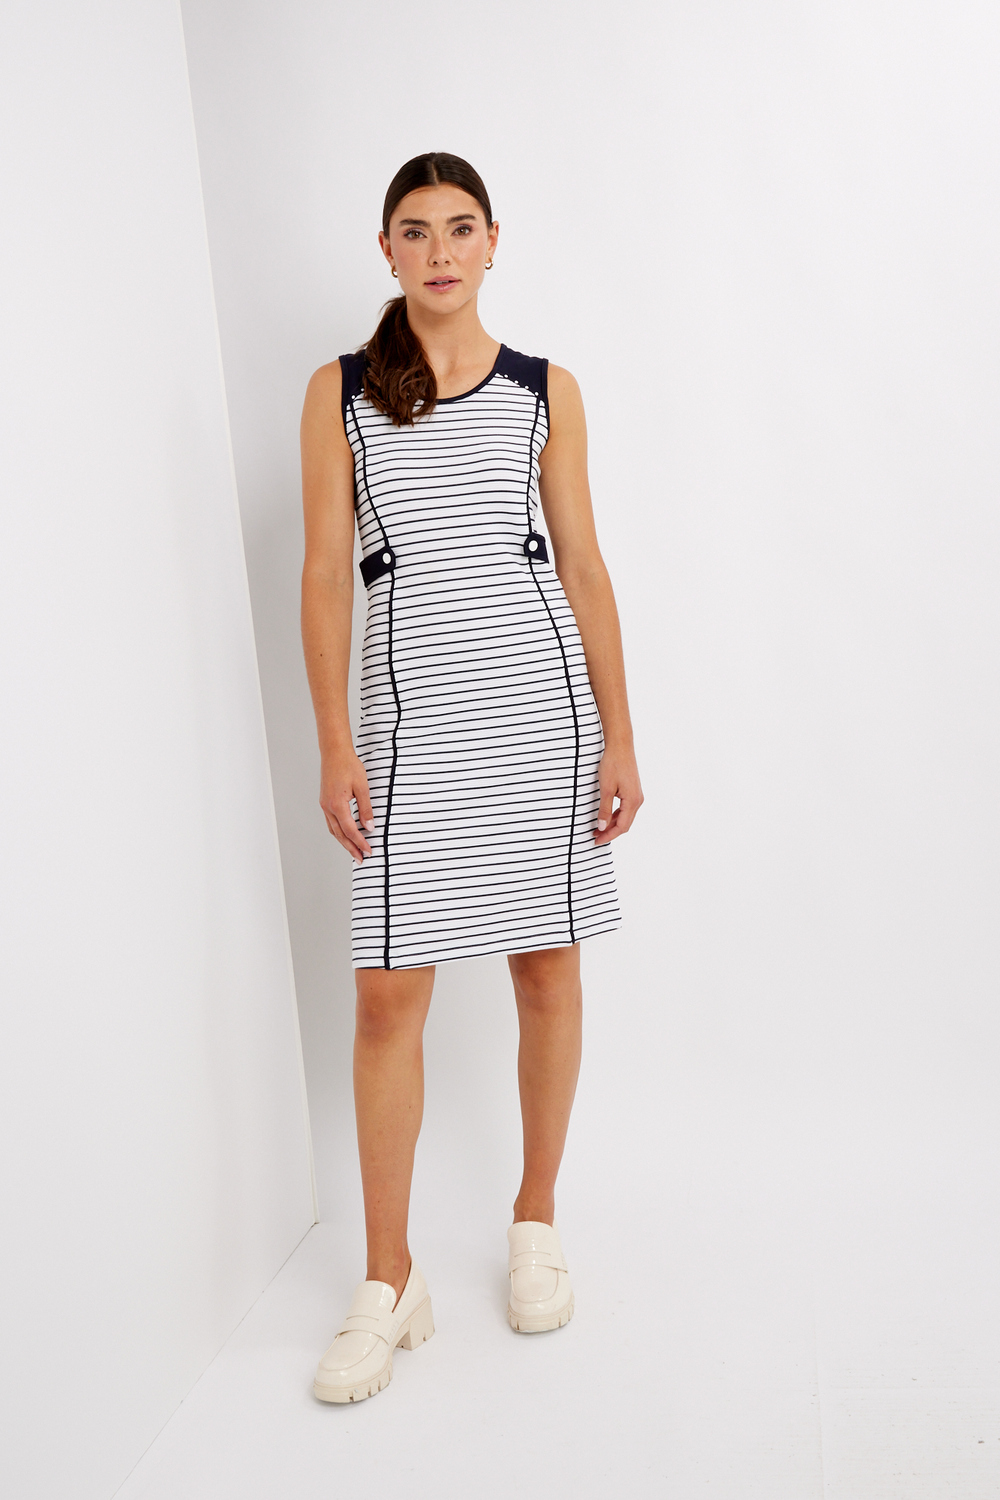 Horizontal Stripes Mini Dress Style 24107. As Sample